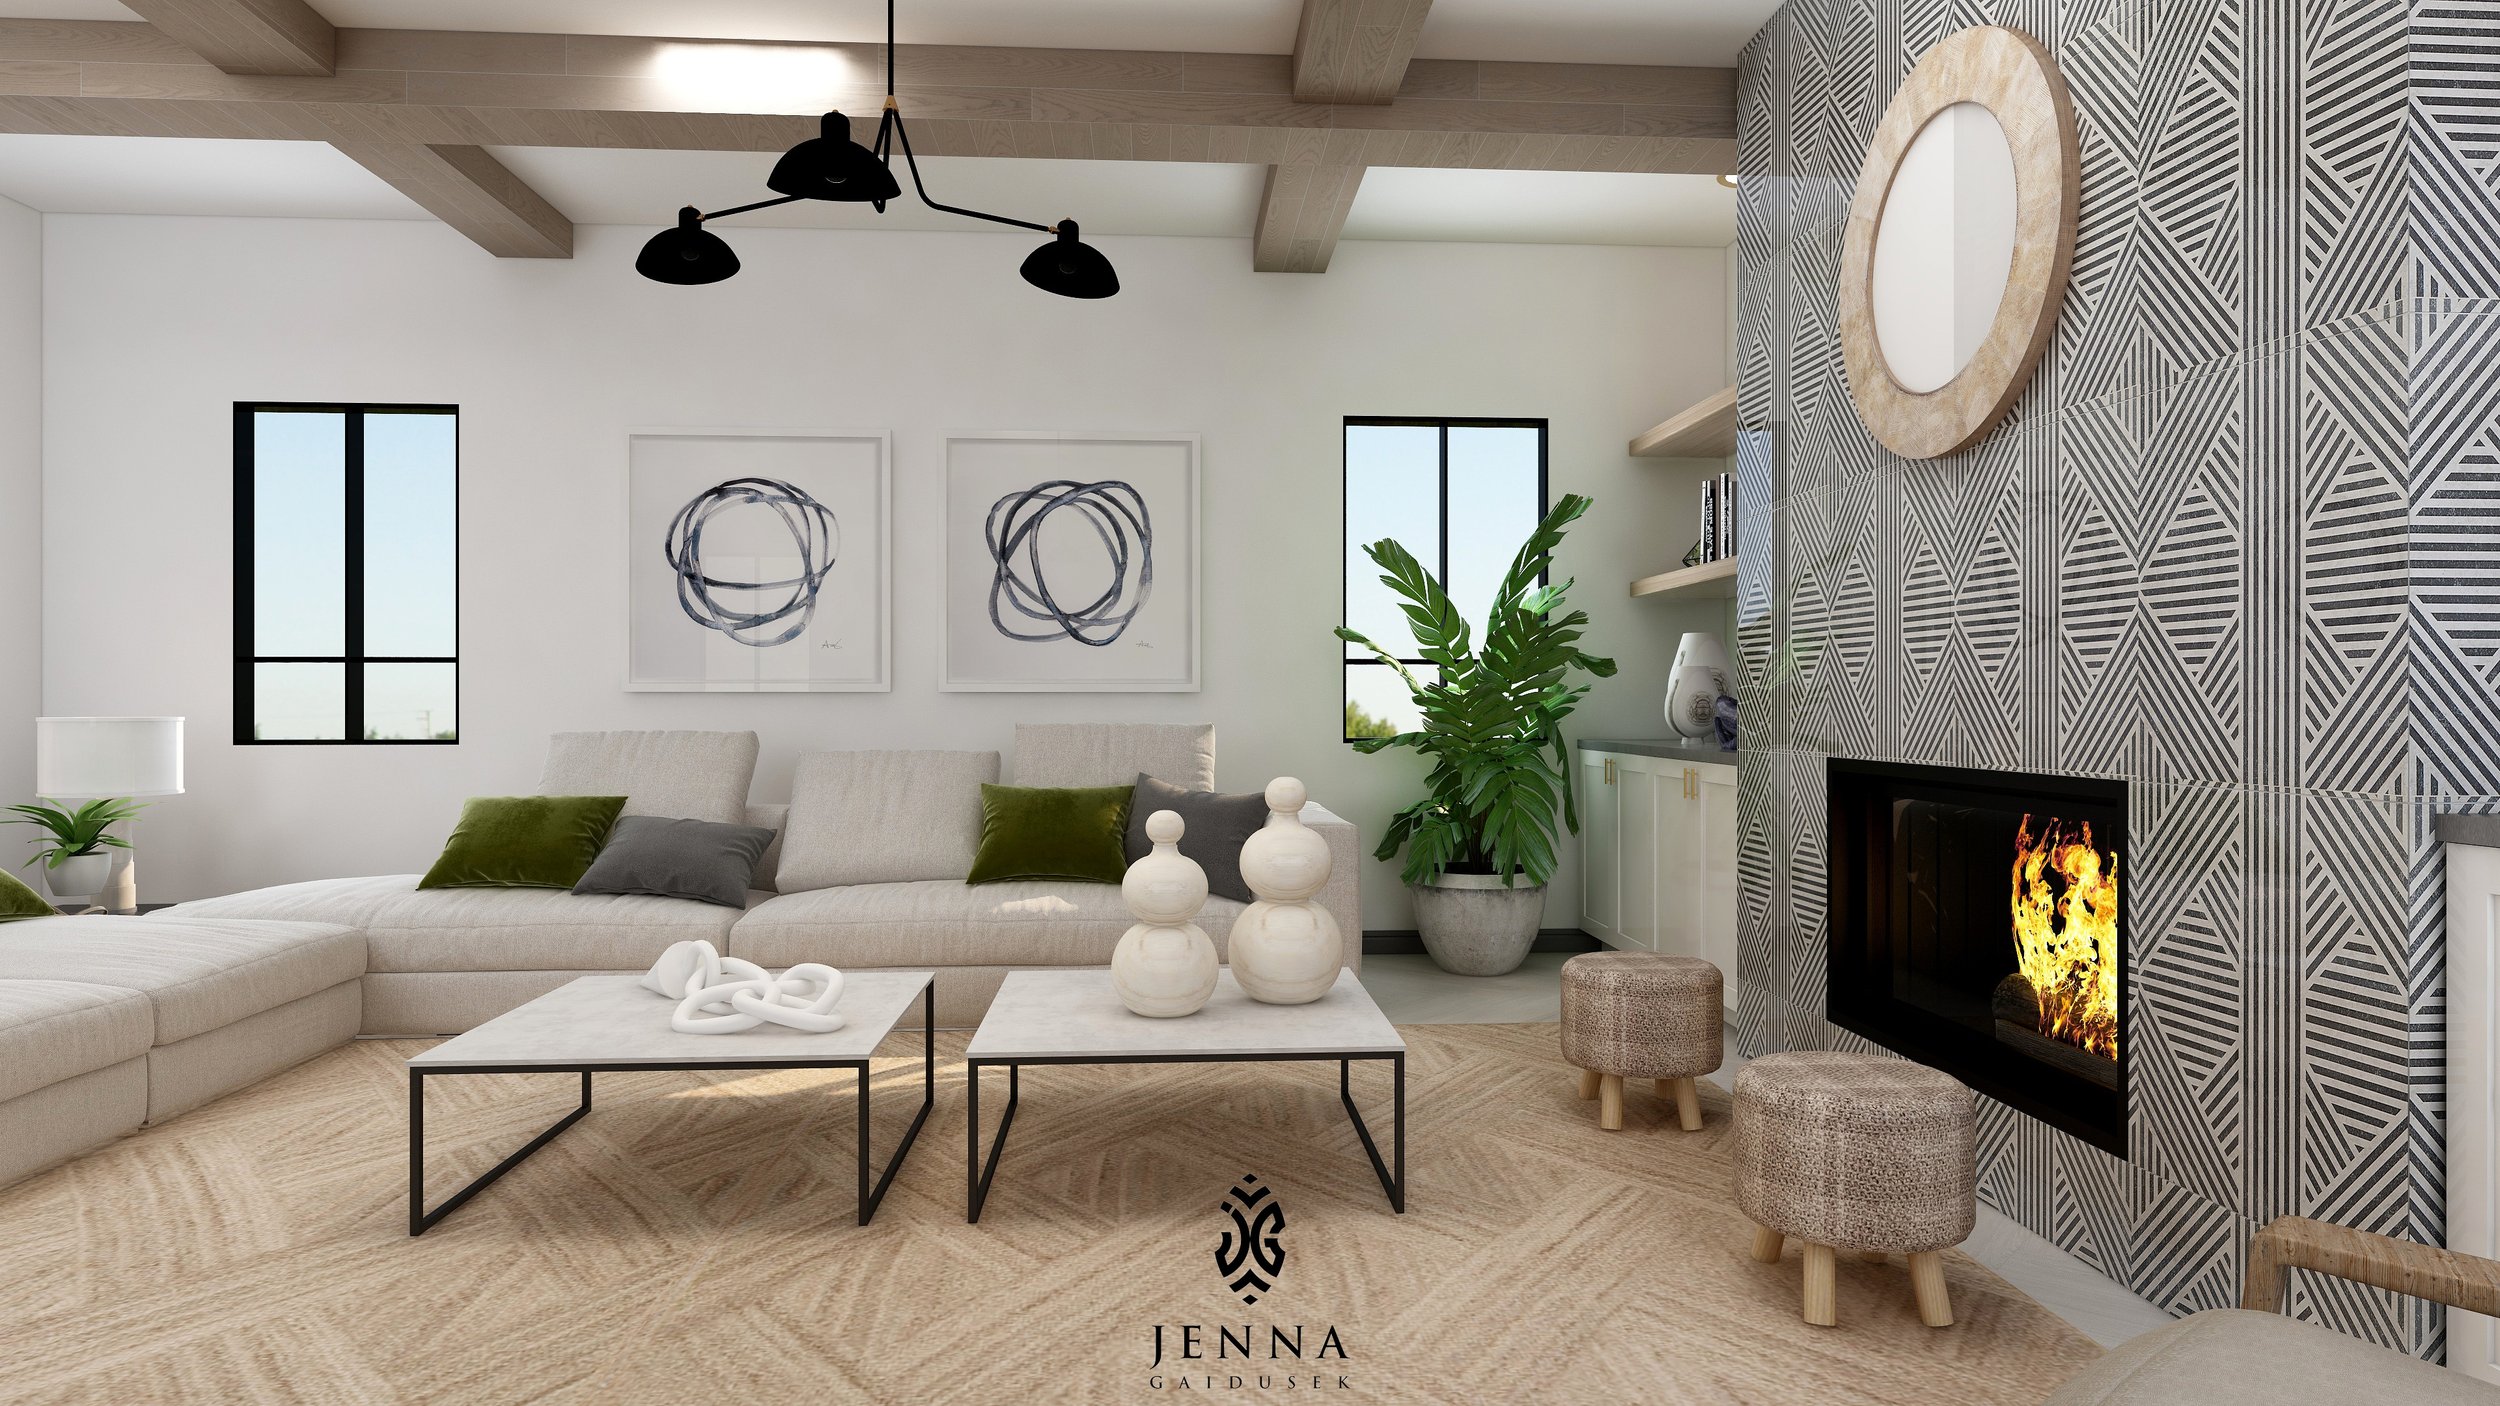 Jenna gaidusek designs- online interior design, modern living room.jpg